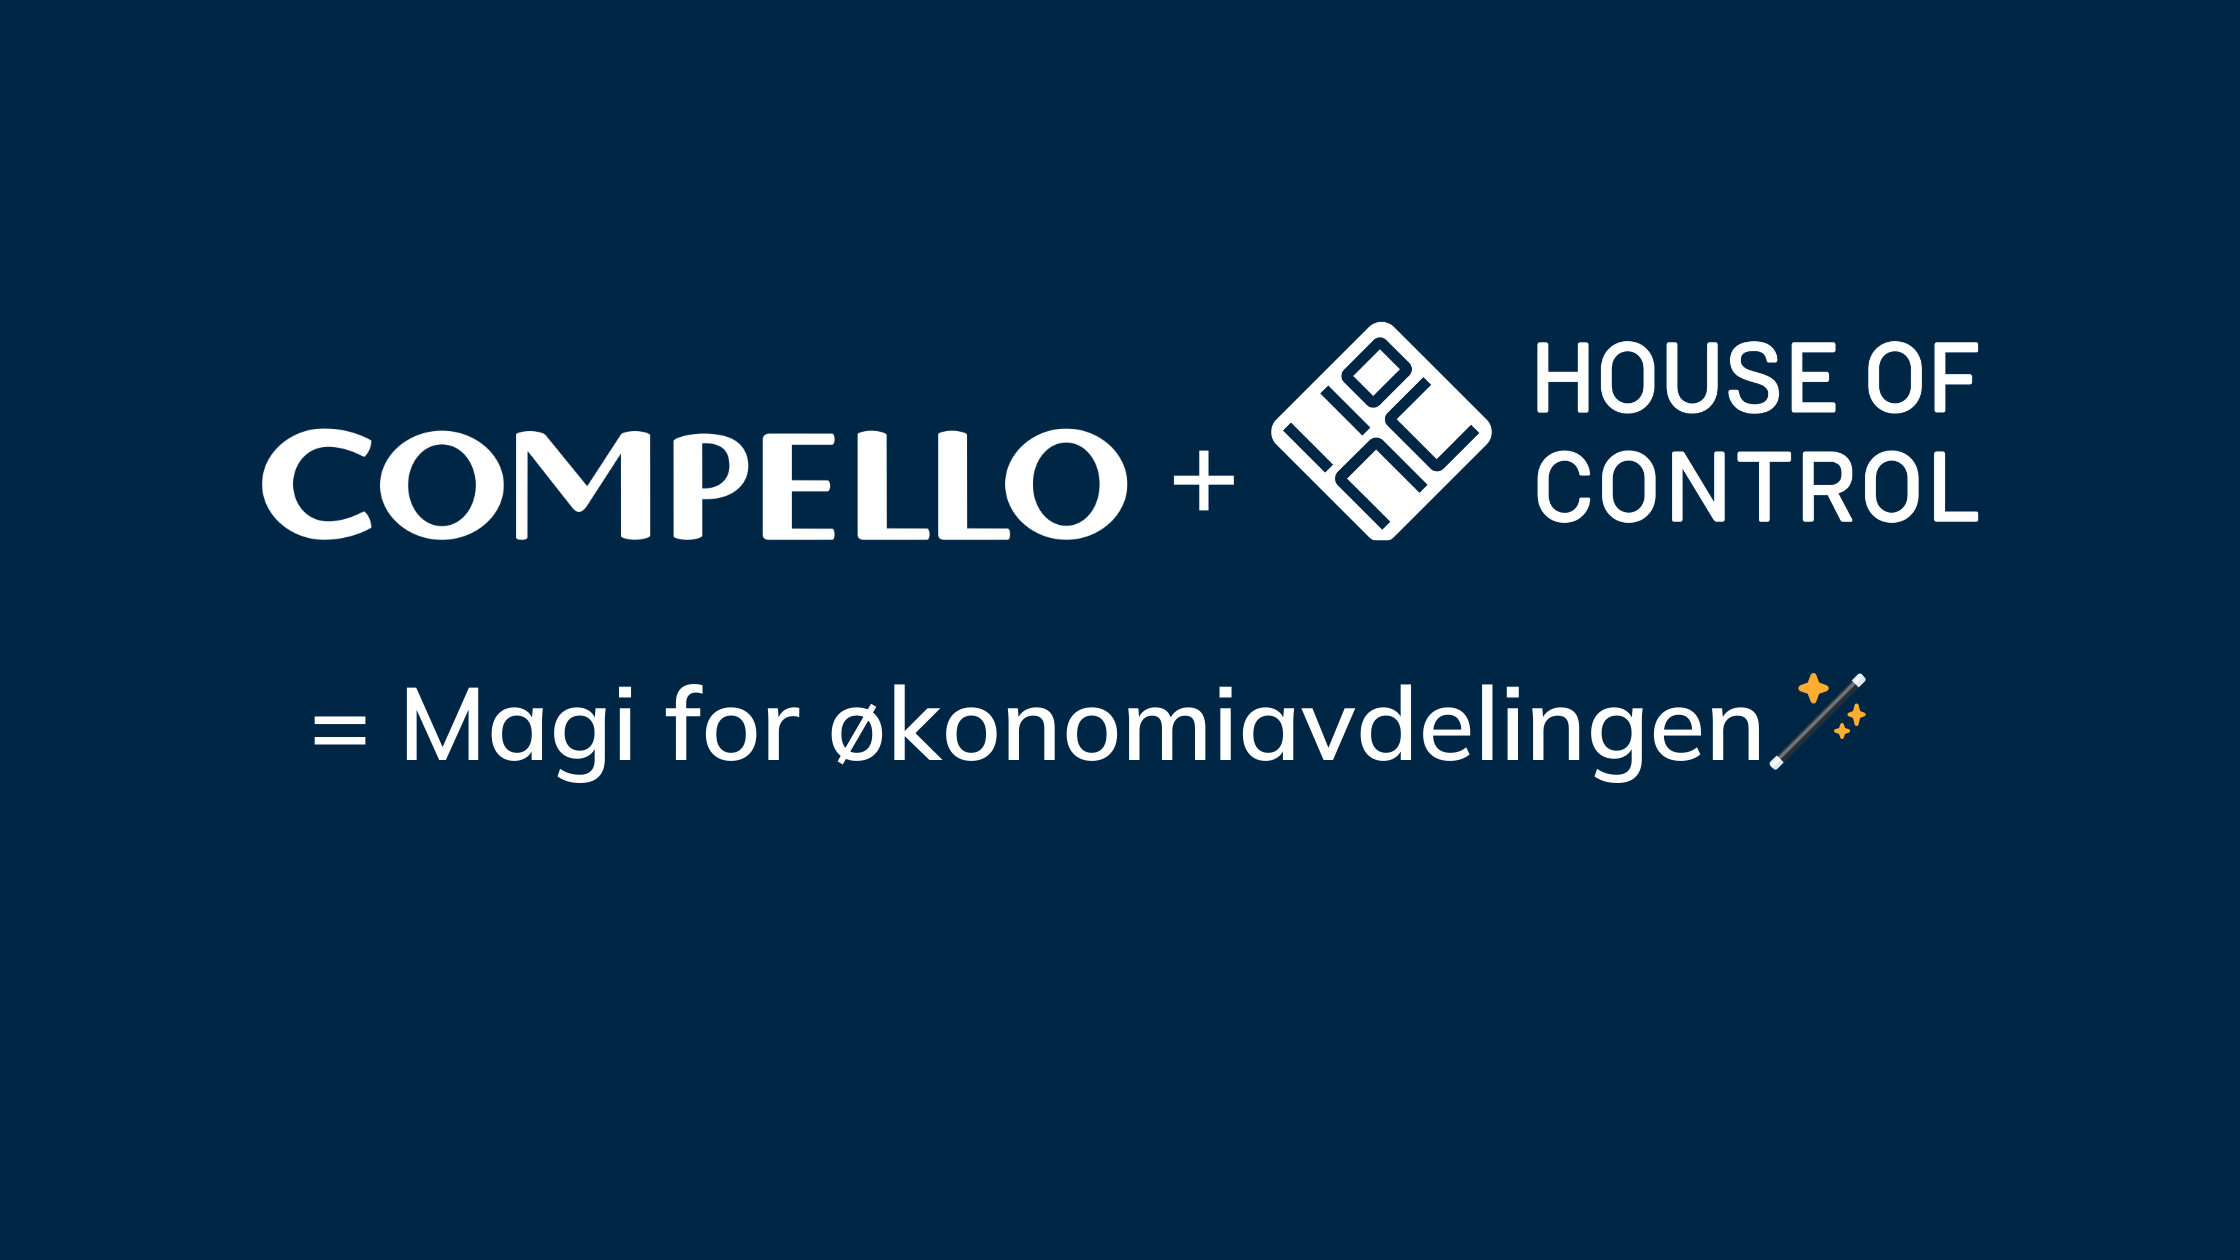 Compello + house of control